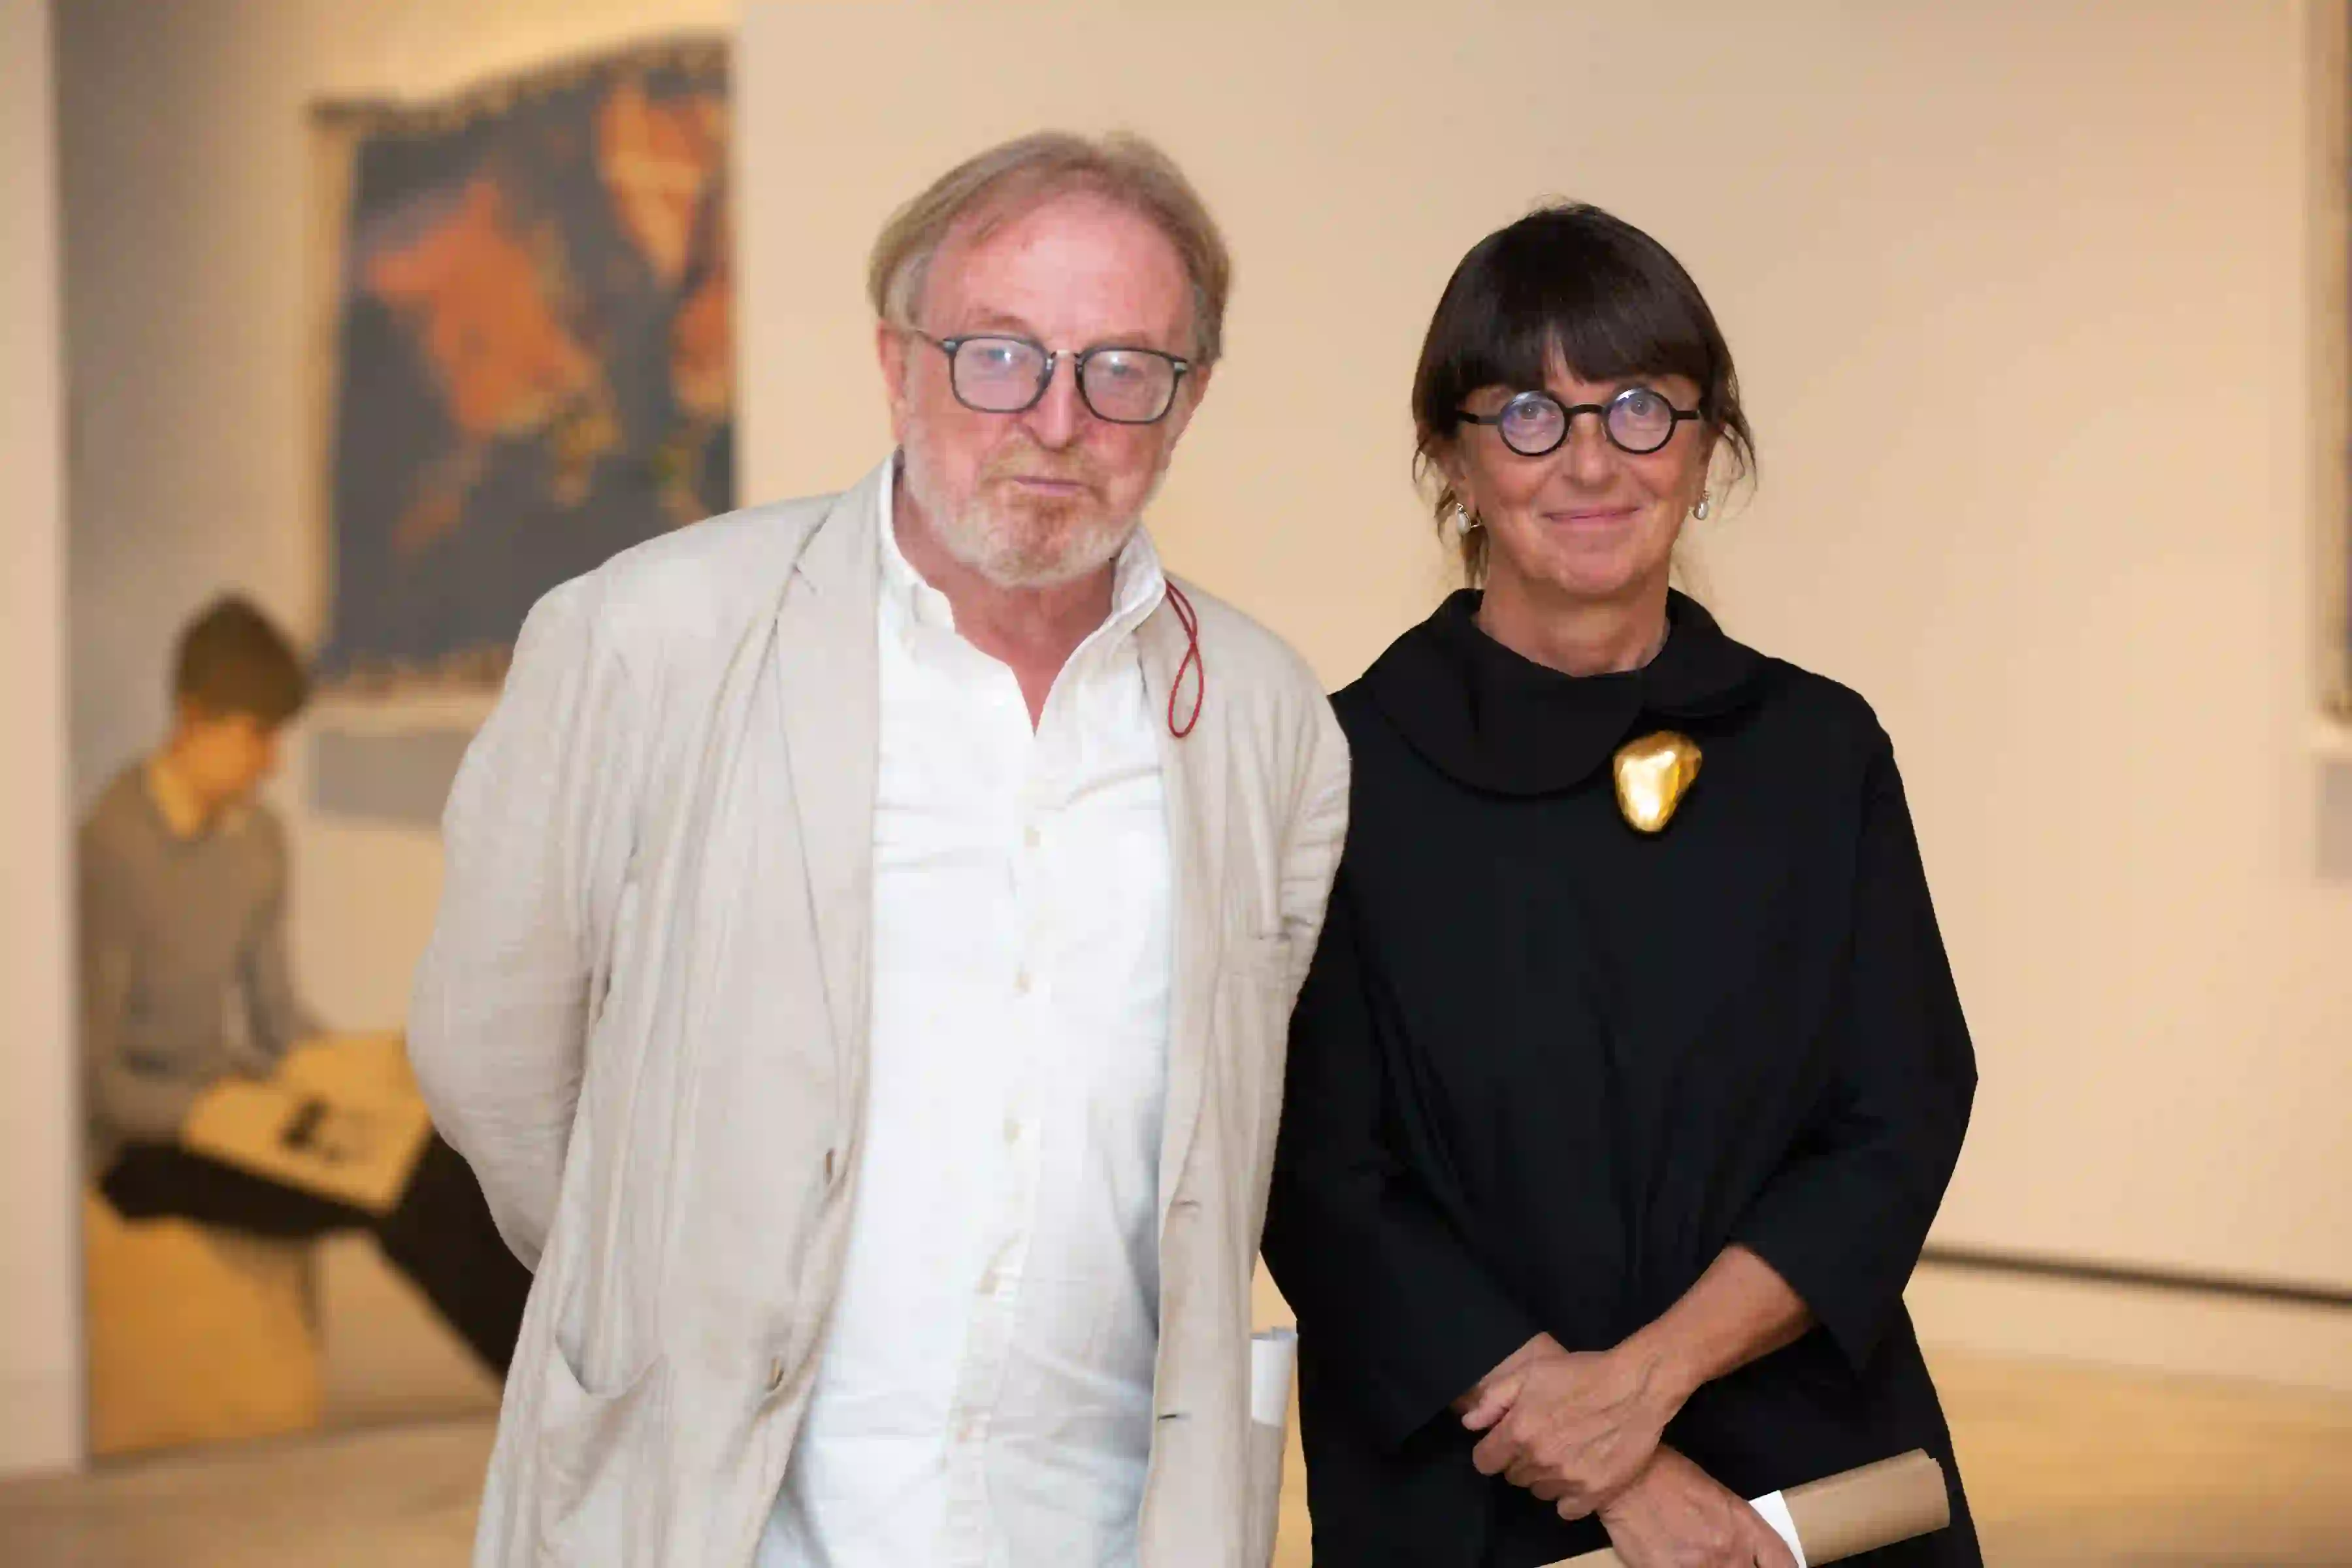 From left to right: Curator of Atelier Bagnoli and Co-editor of "Marco Bagnoli" Antonella Soldaini